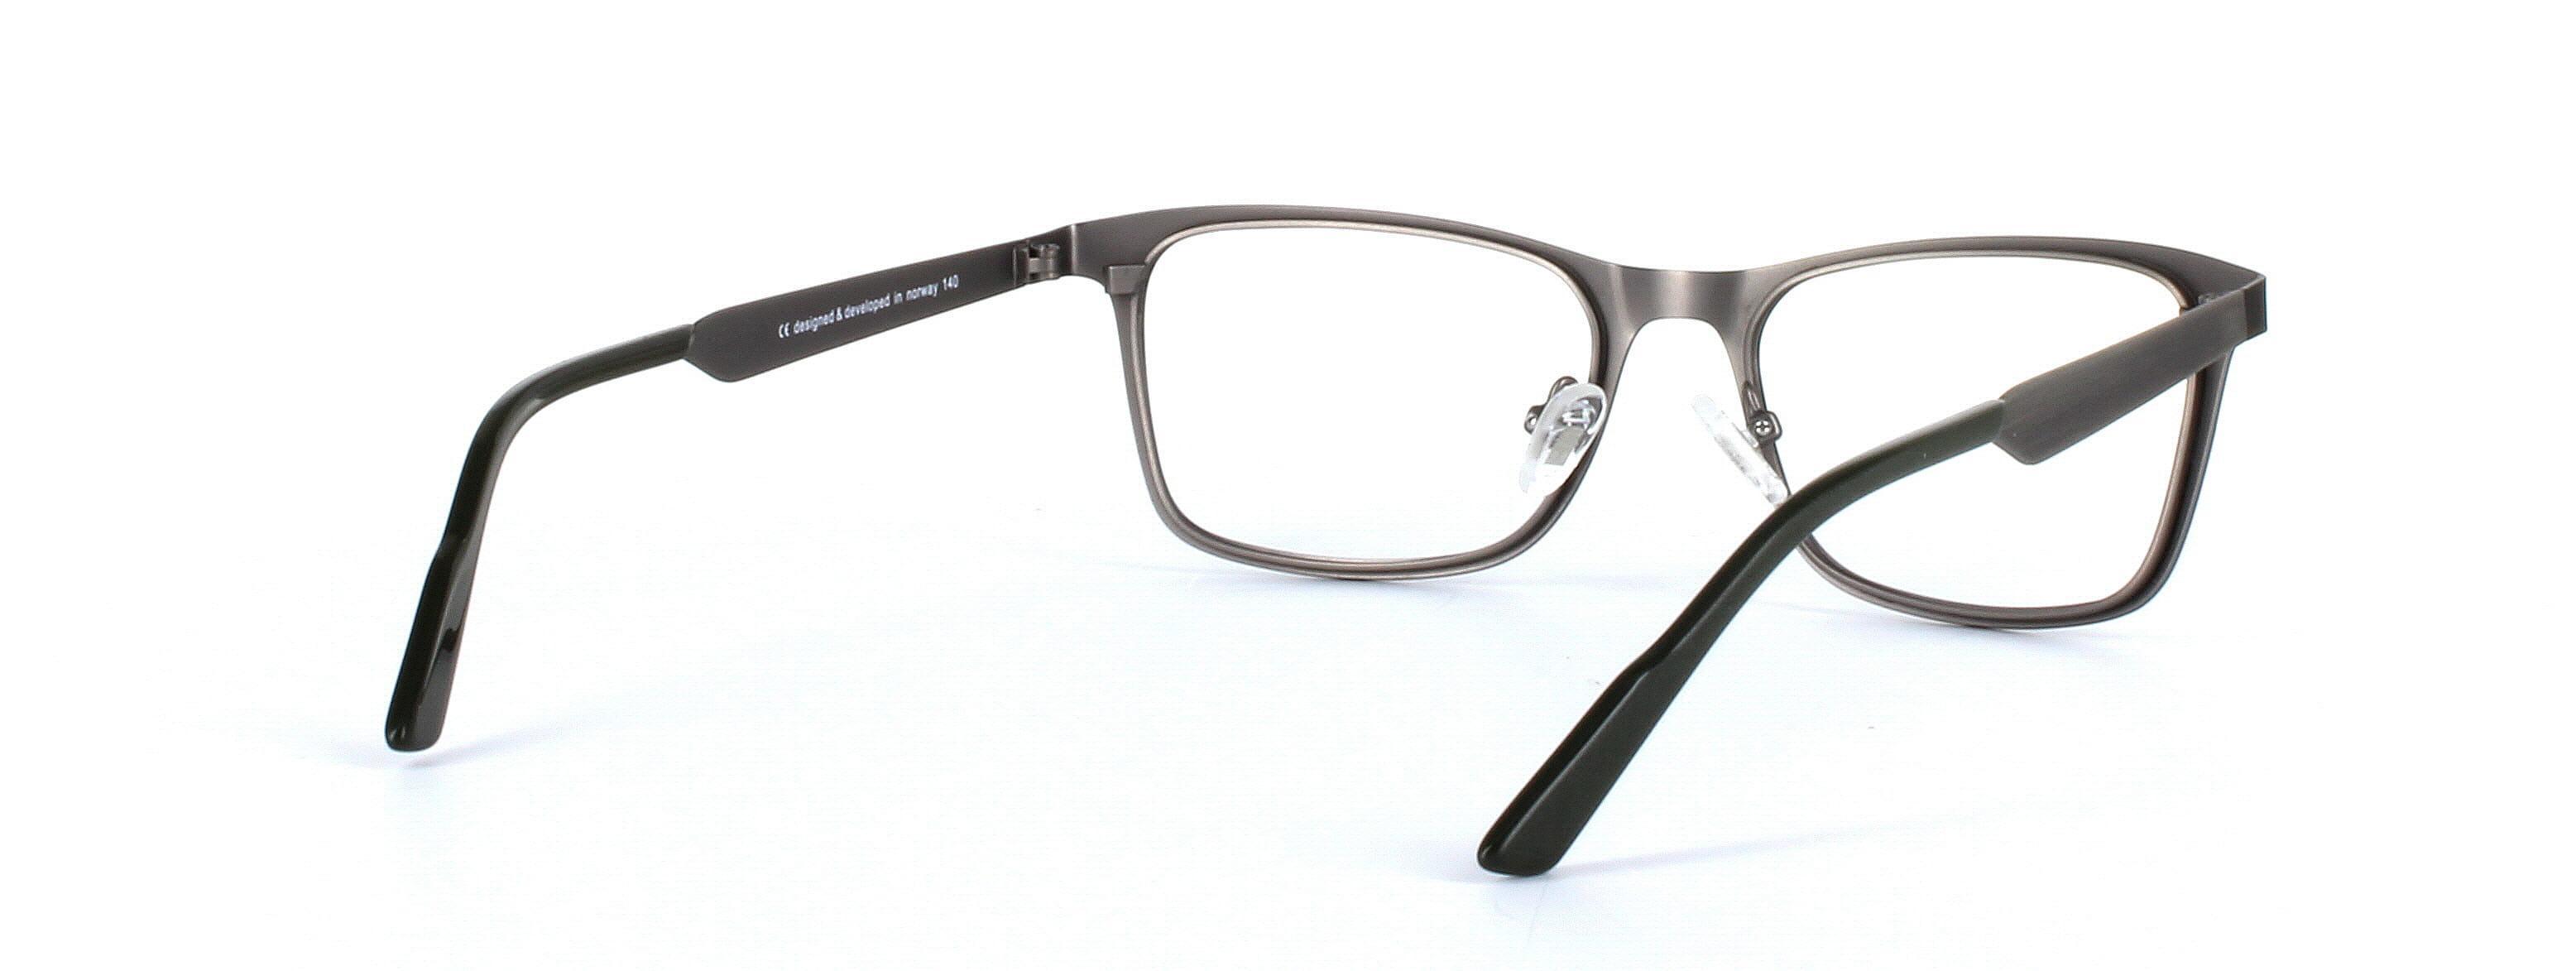 Helly Hansen HH 1008 Gunmetal Full Rim Rectangular Oval Metal Glasses - Image View 4